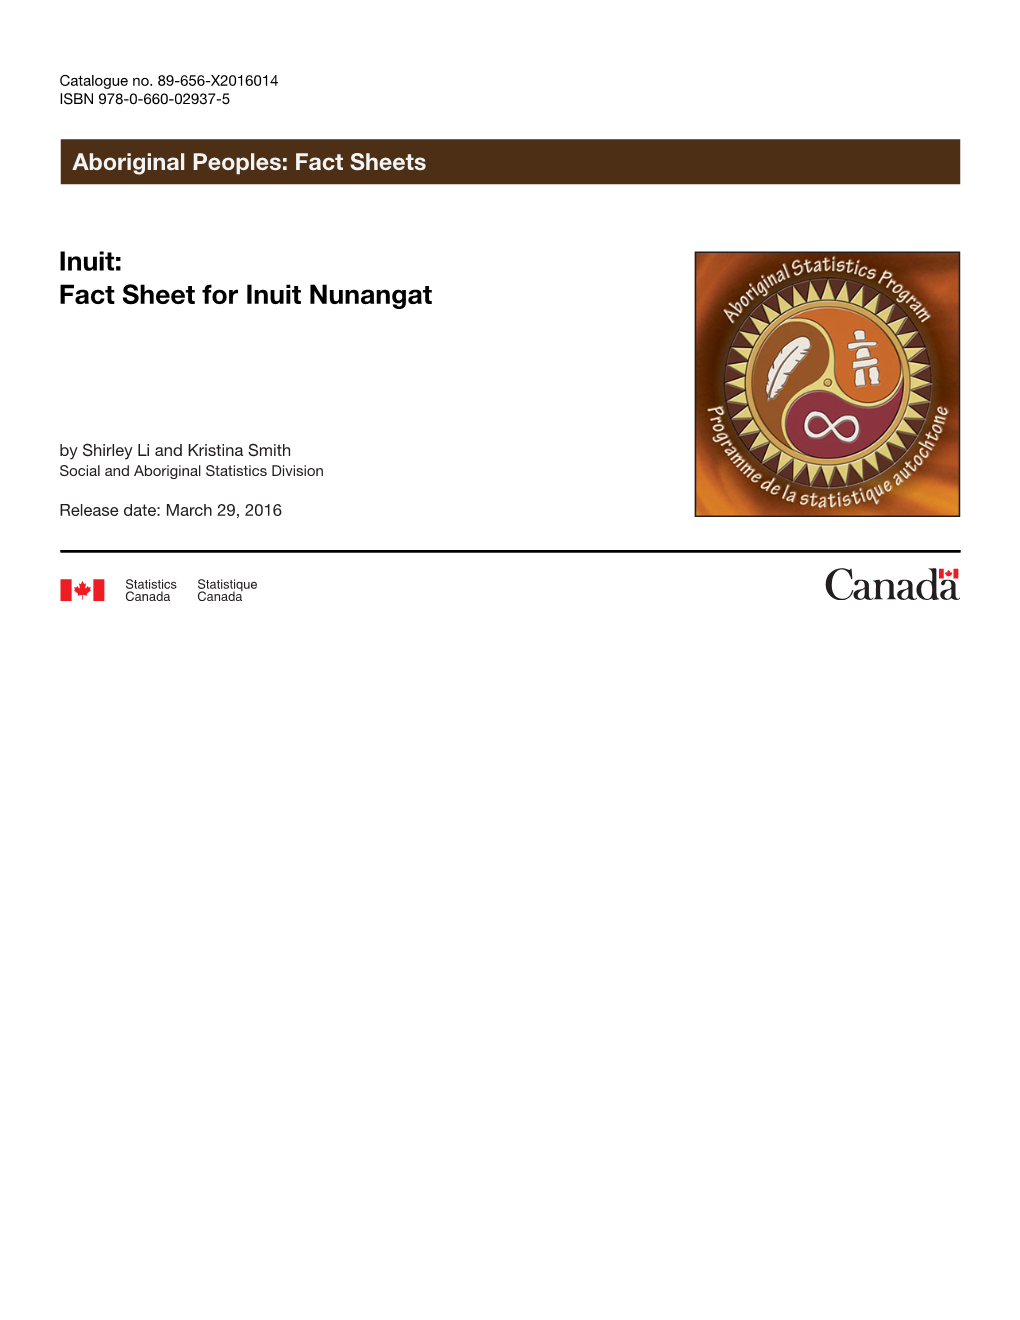 Fact Sheet for Inuit Nunangat